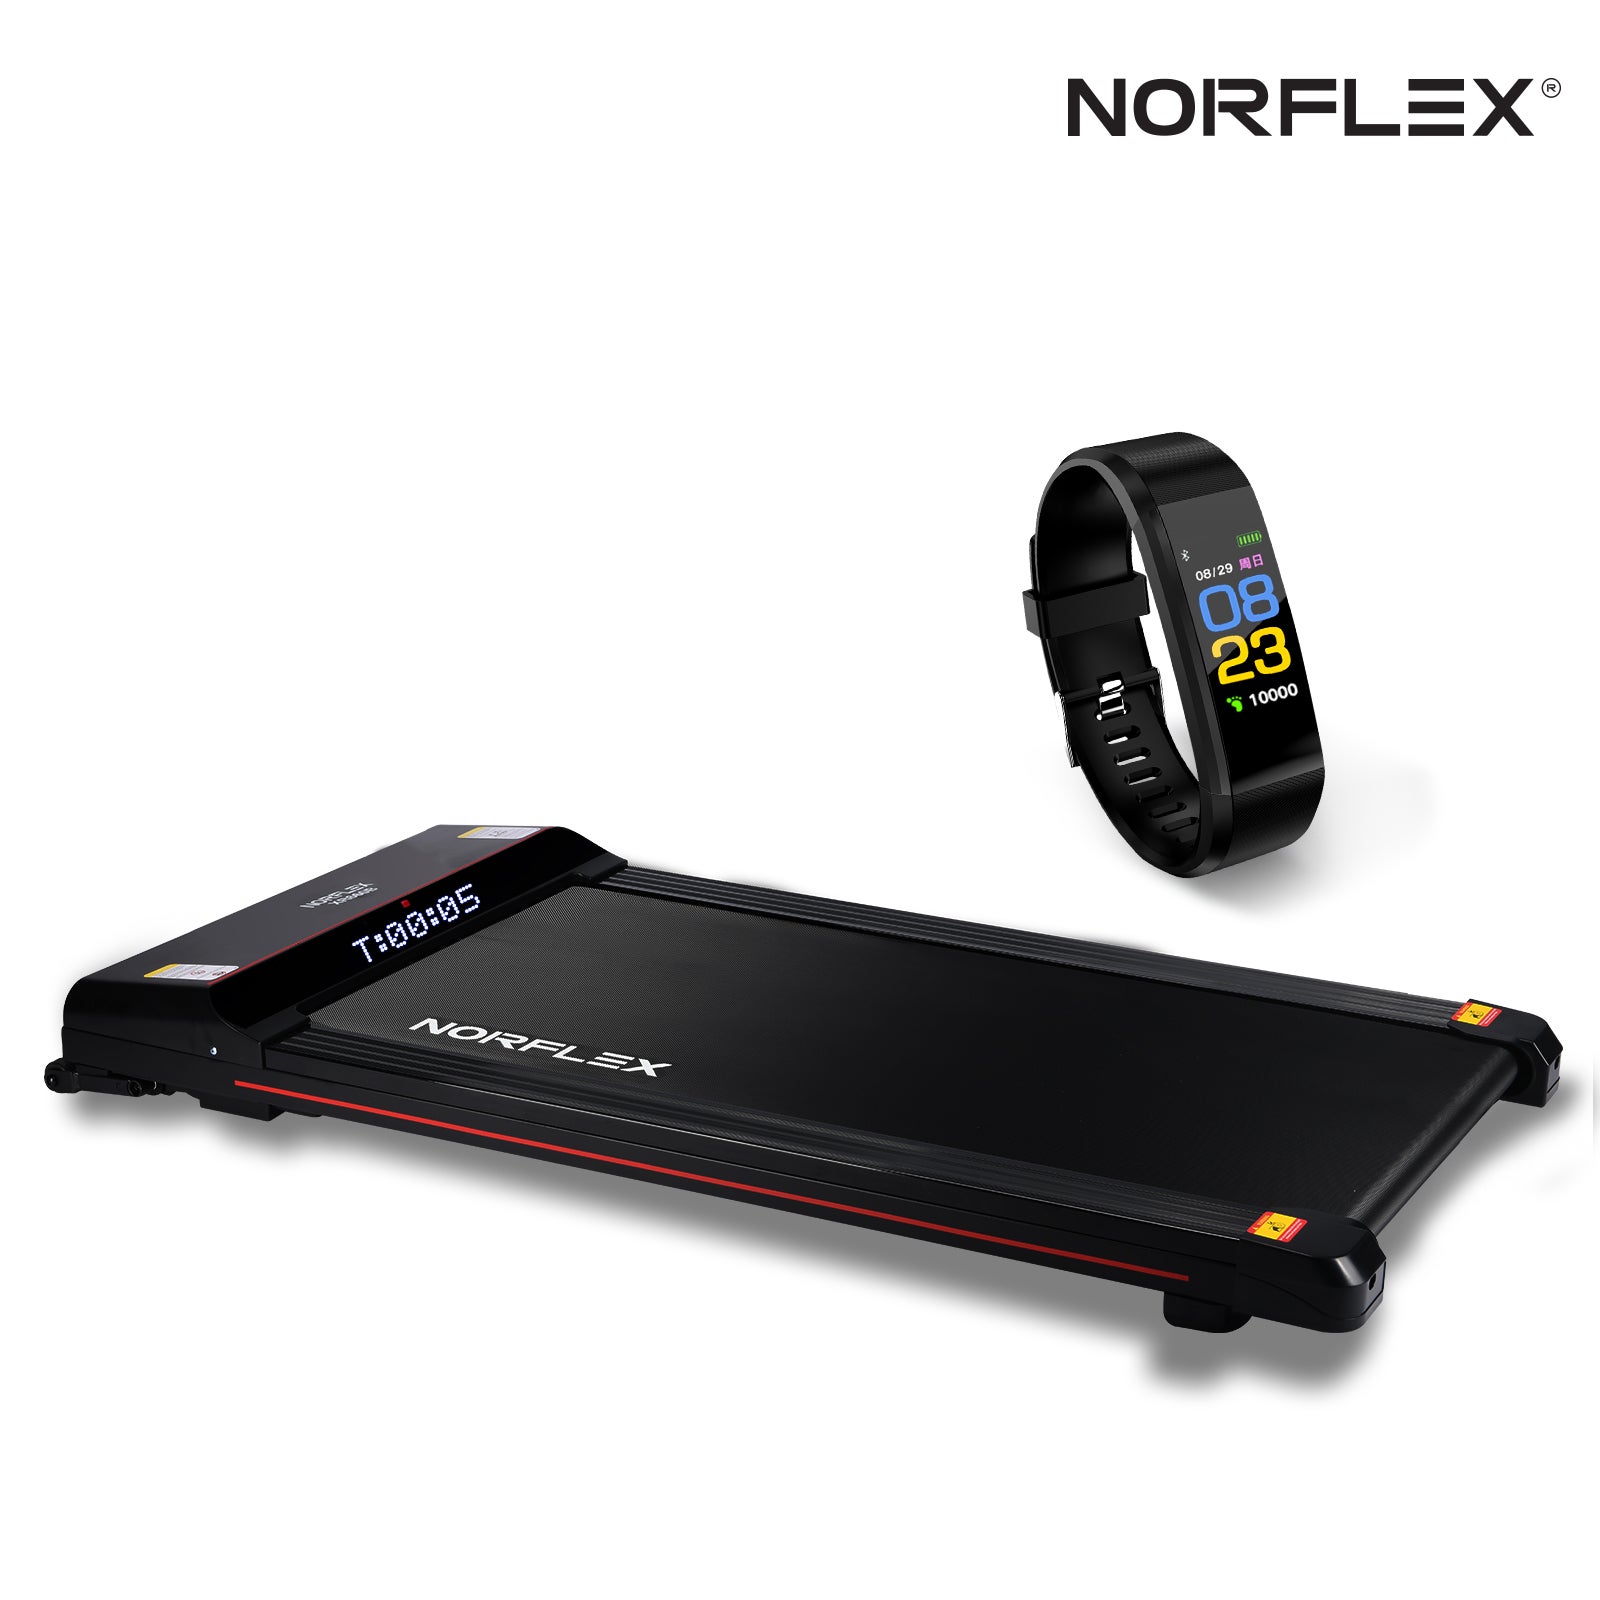 NORFLEX Electric Treadmill